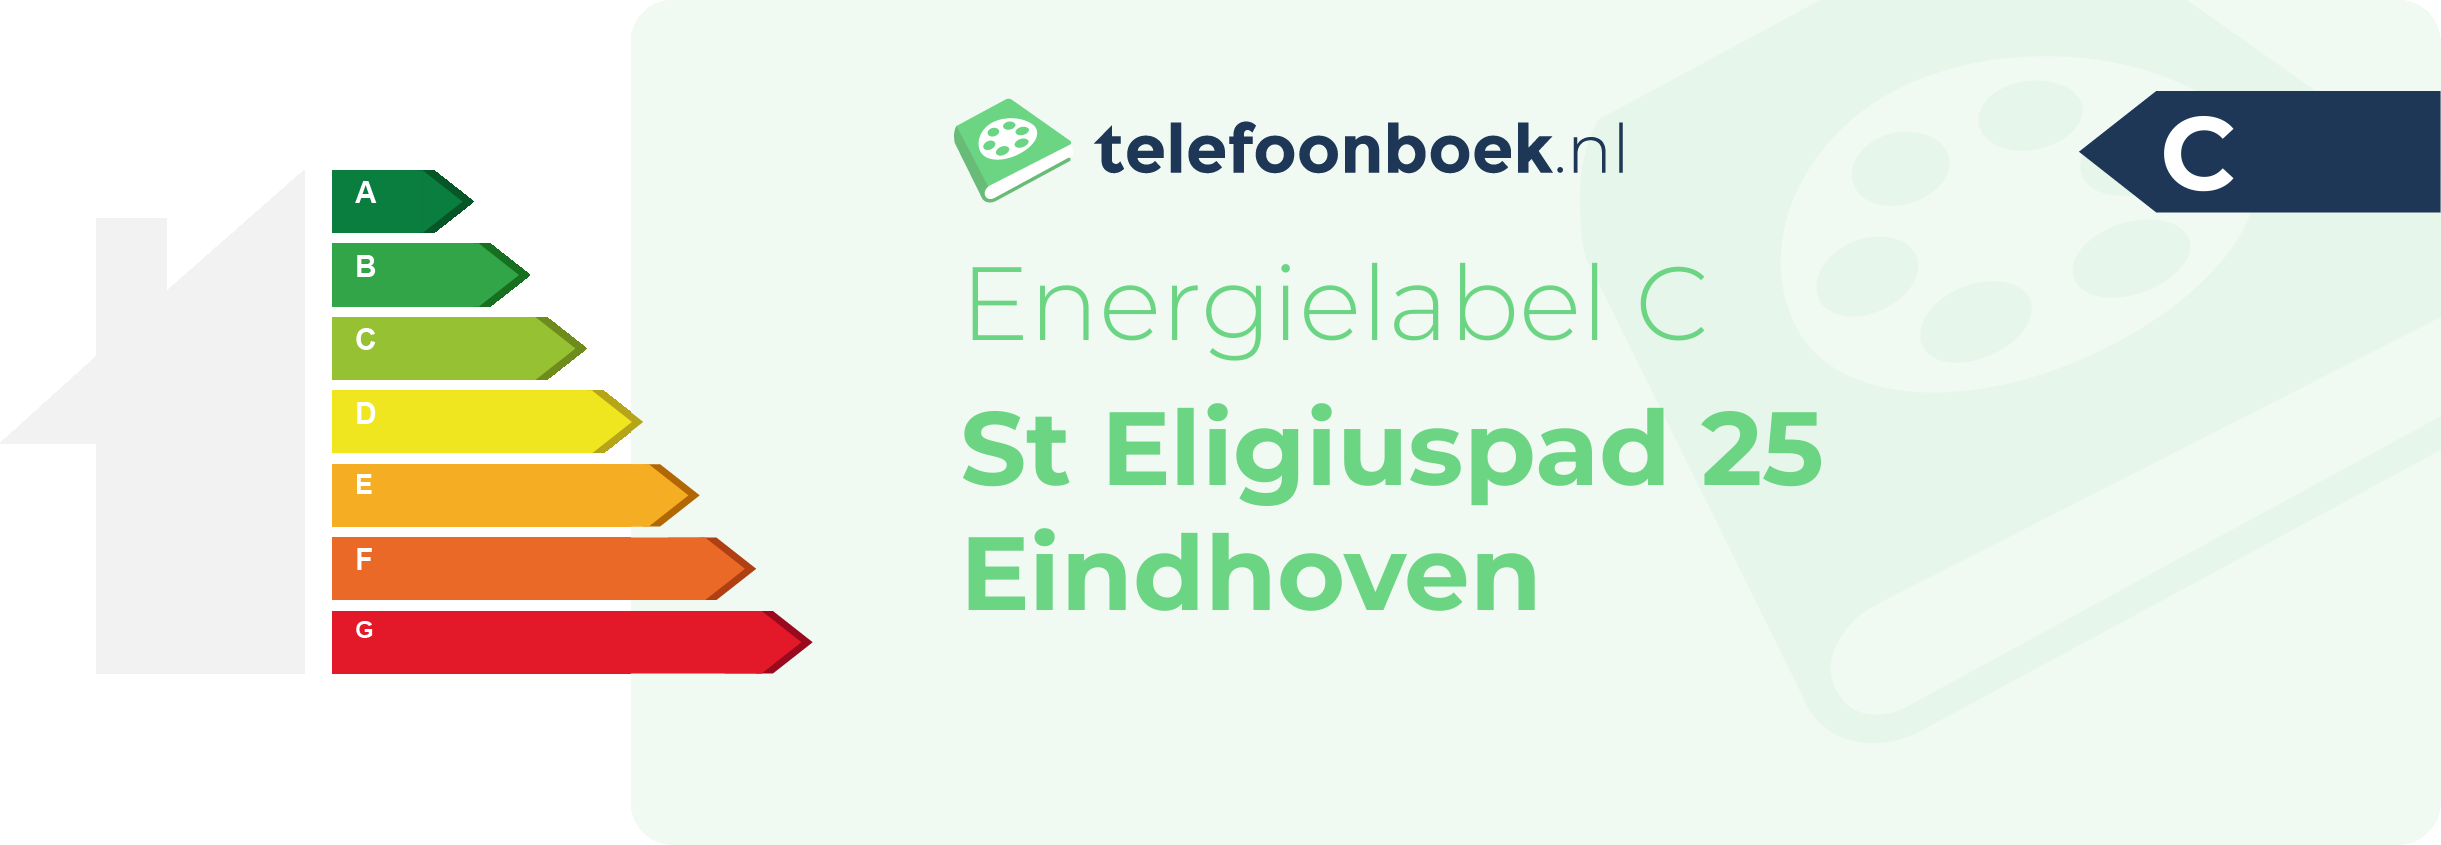 Energielabel St Eligiuspad 25 Eindhoven